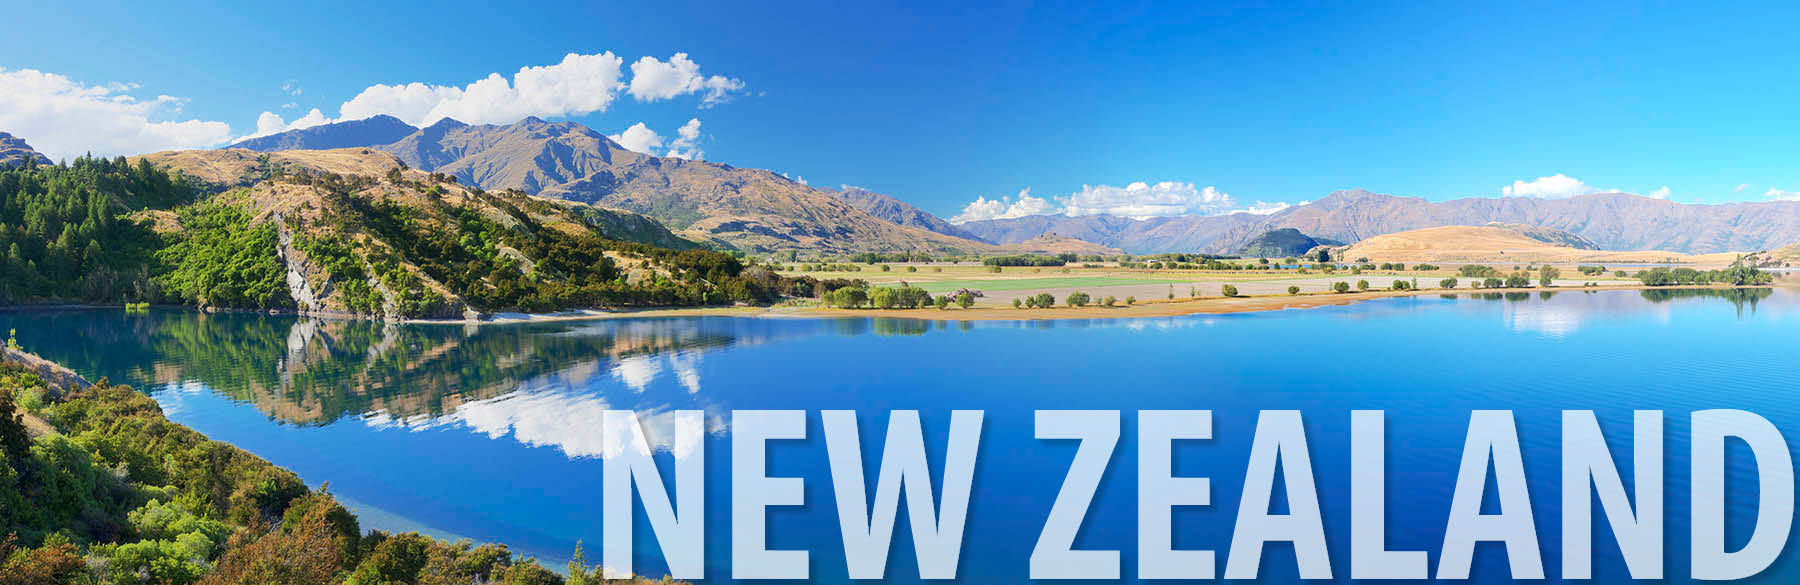 New zealand ответы. Новая Зеландия надпись. Welcome to New Zealand. Новая Зеландия презентация. Новая Зеландия фото с надписью.